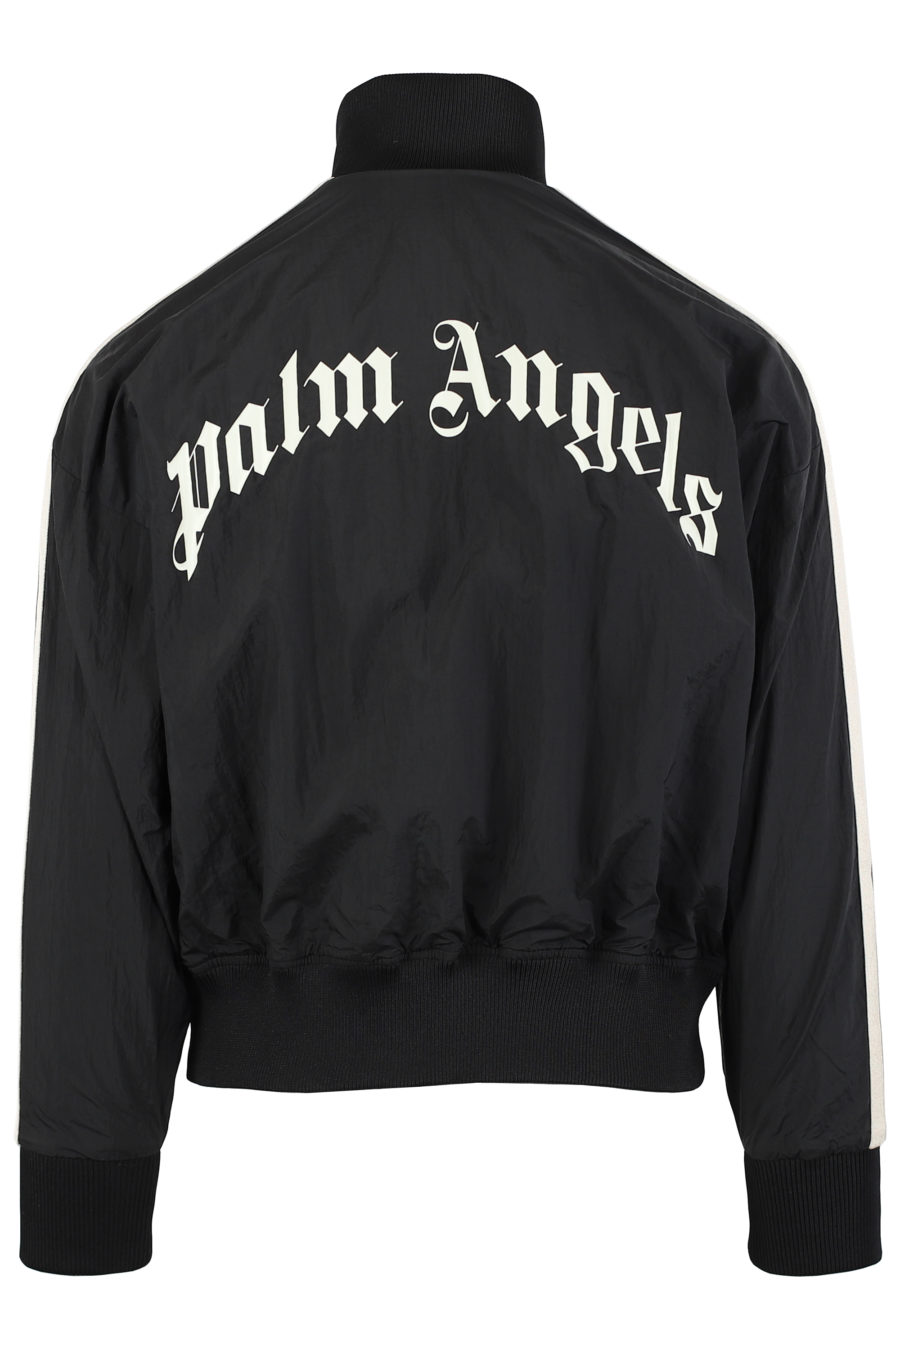 Palm Angels - Chaqueta negra con logo en la parte posterior - BLS Fashion